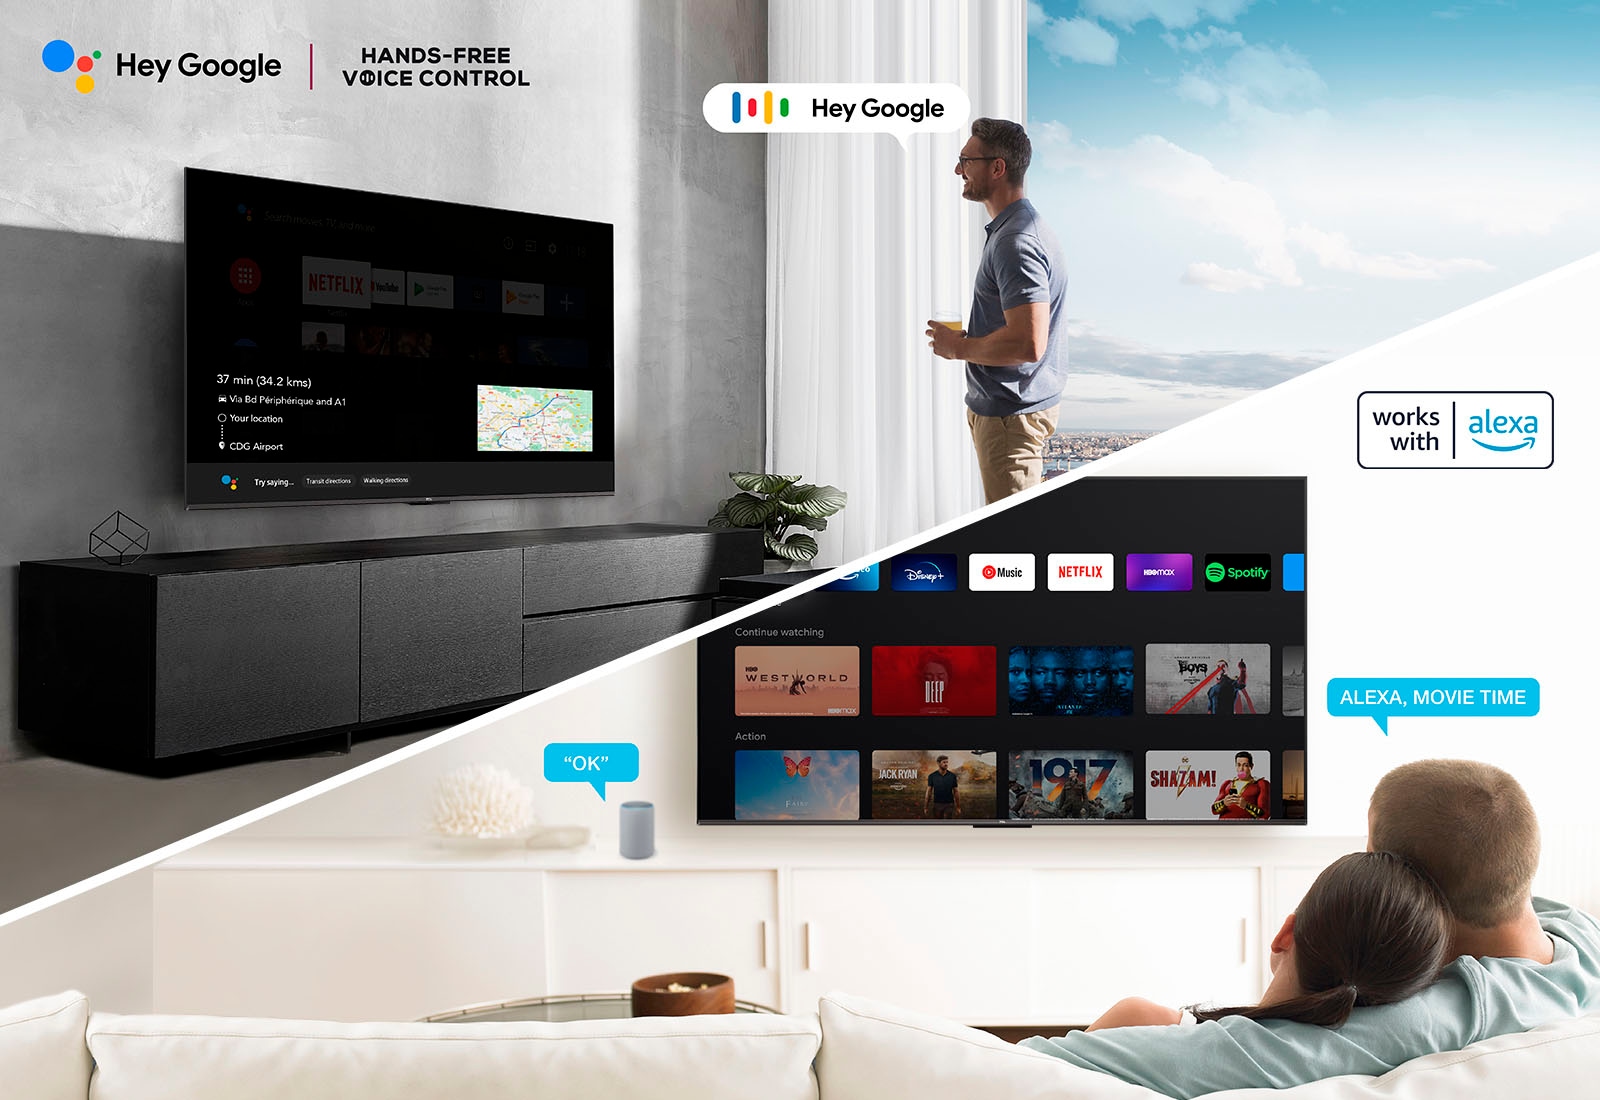 TCL LED-Fernseher »65P731X2«, 164 cm/65 Zoll, 4K Ultra HD, Smart-TV-Google TV, HDR Premium, Dolby Atmos, HDMI 2.1, Metallgehäuse